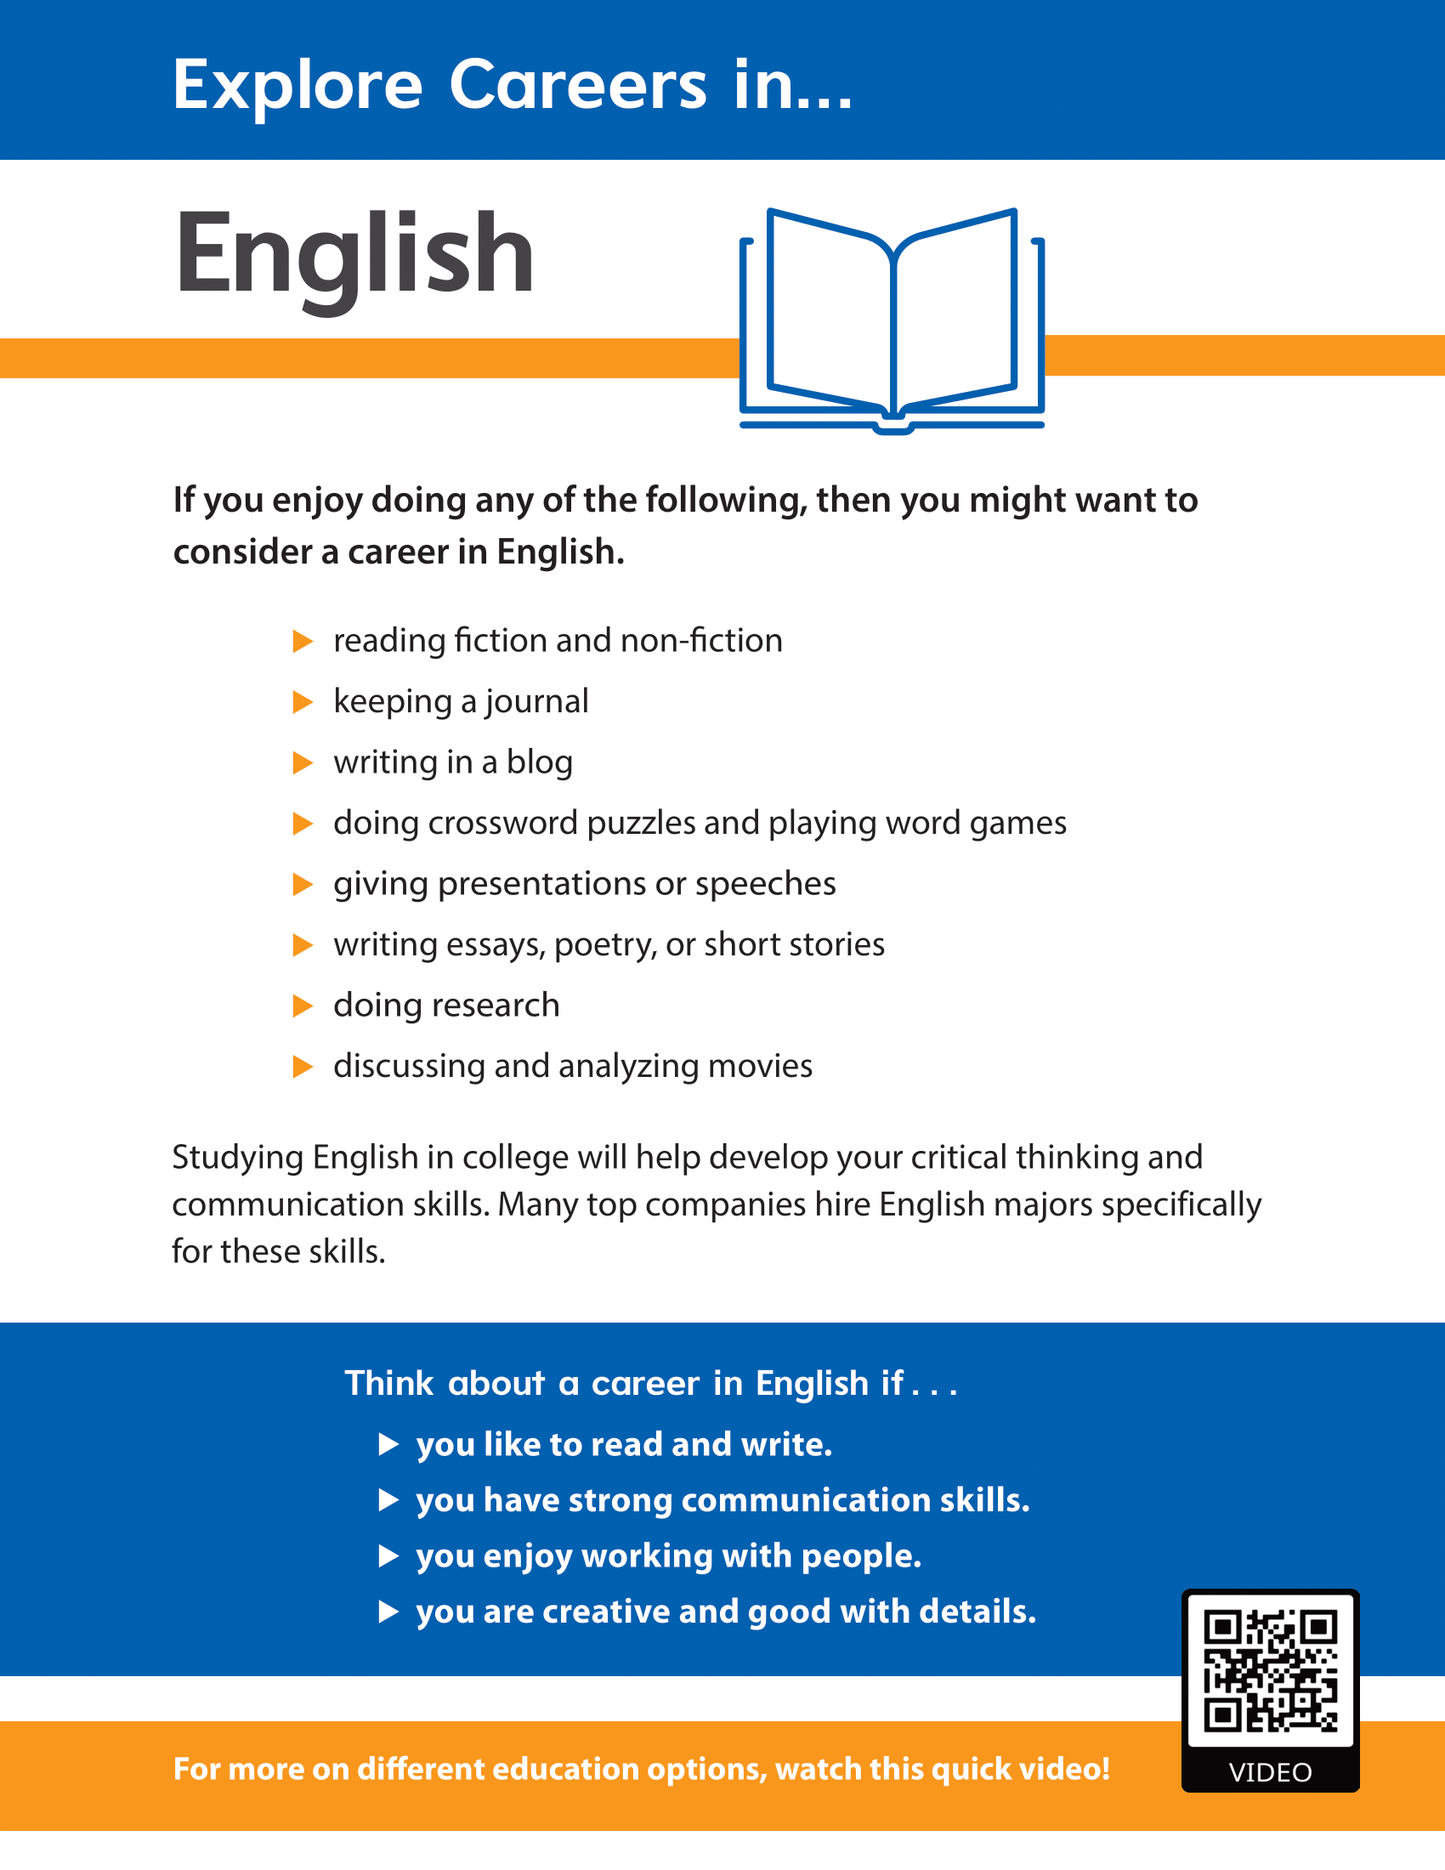 Explore Careers in English